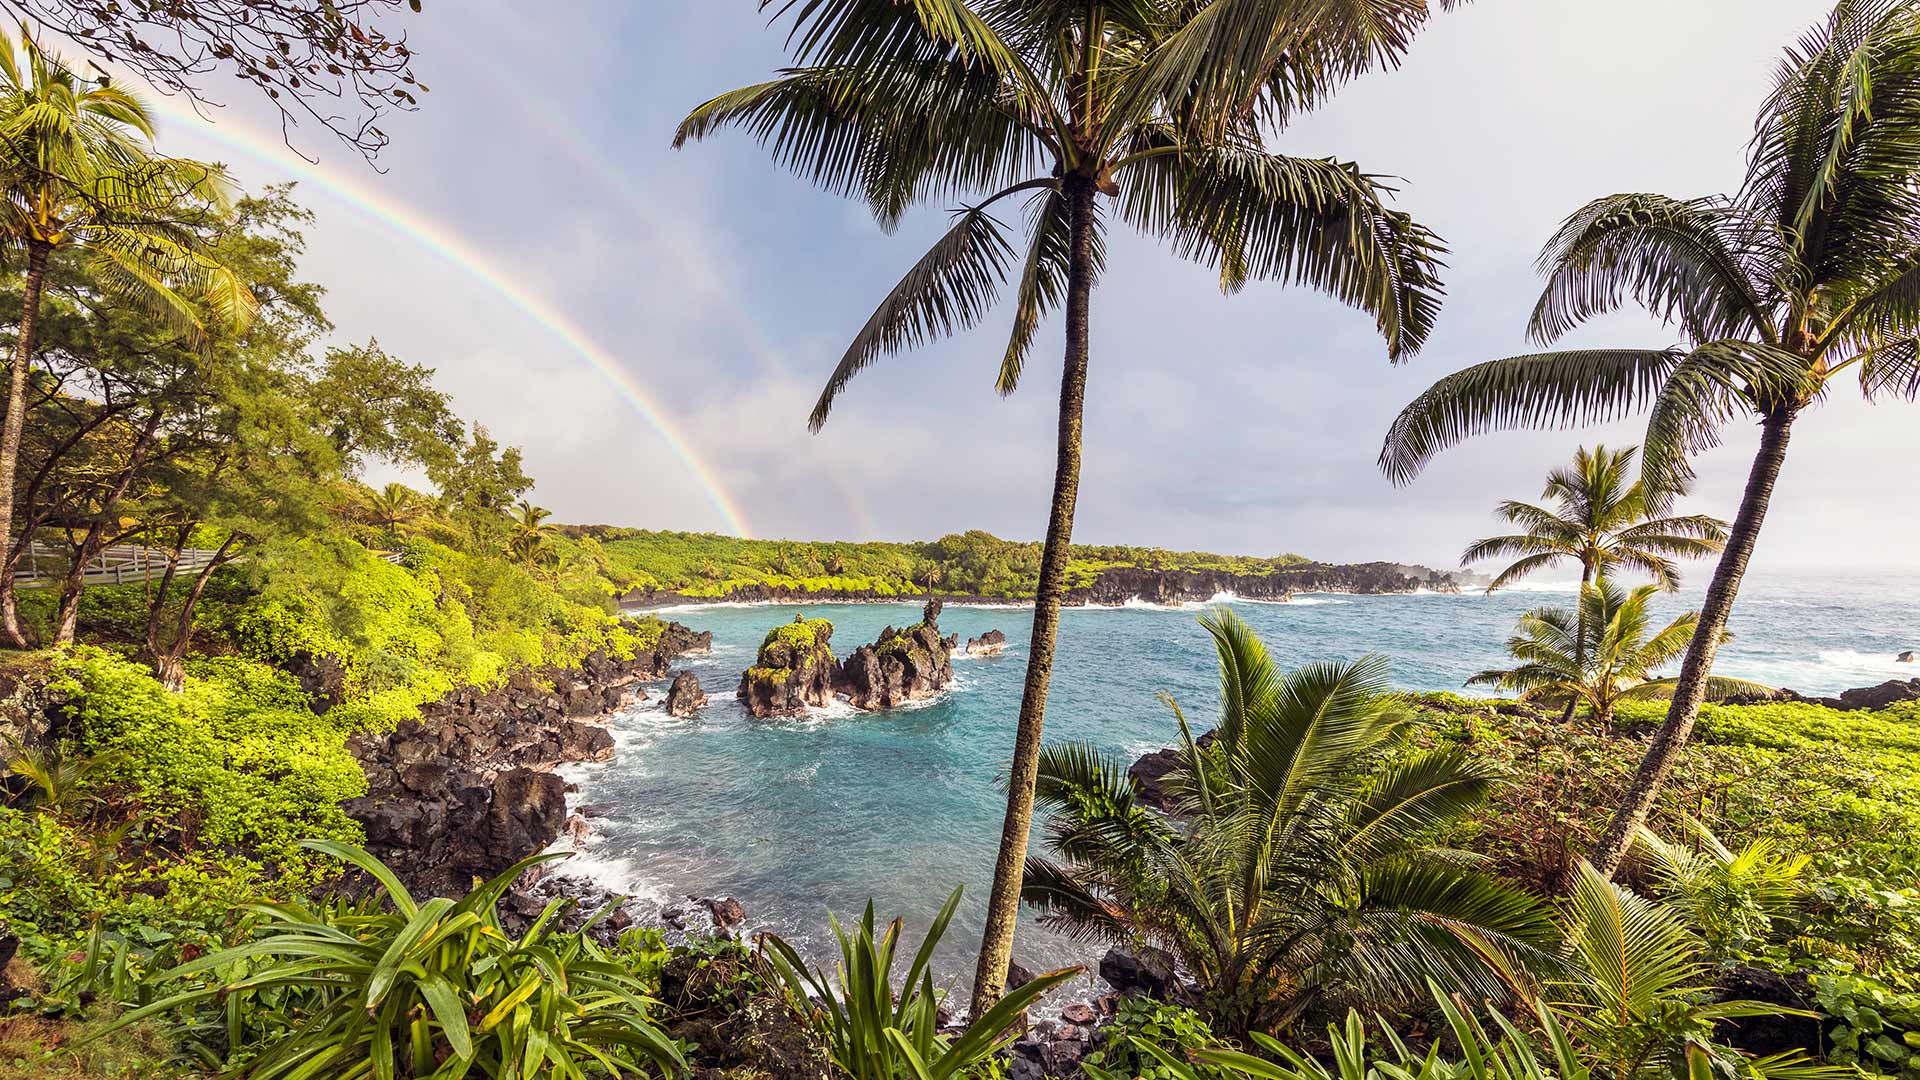 Double rainbow over Maui coastline